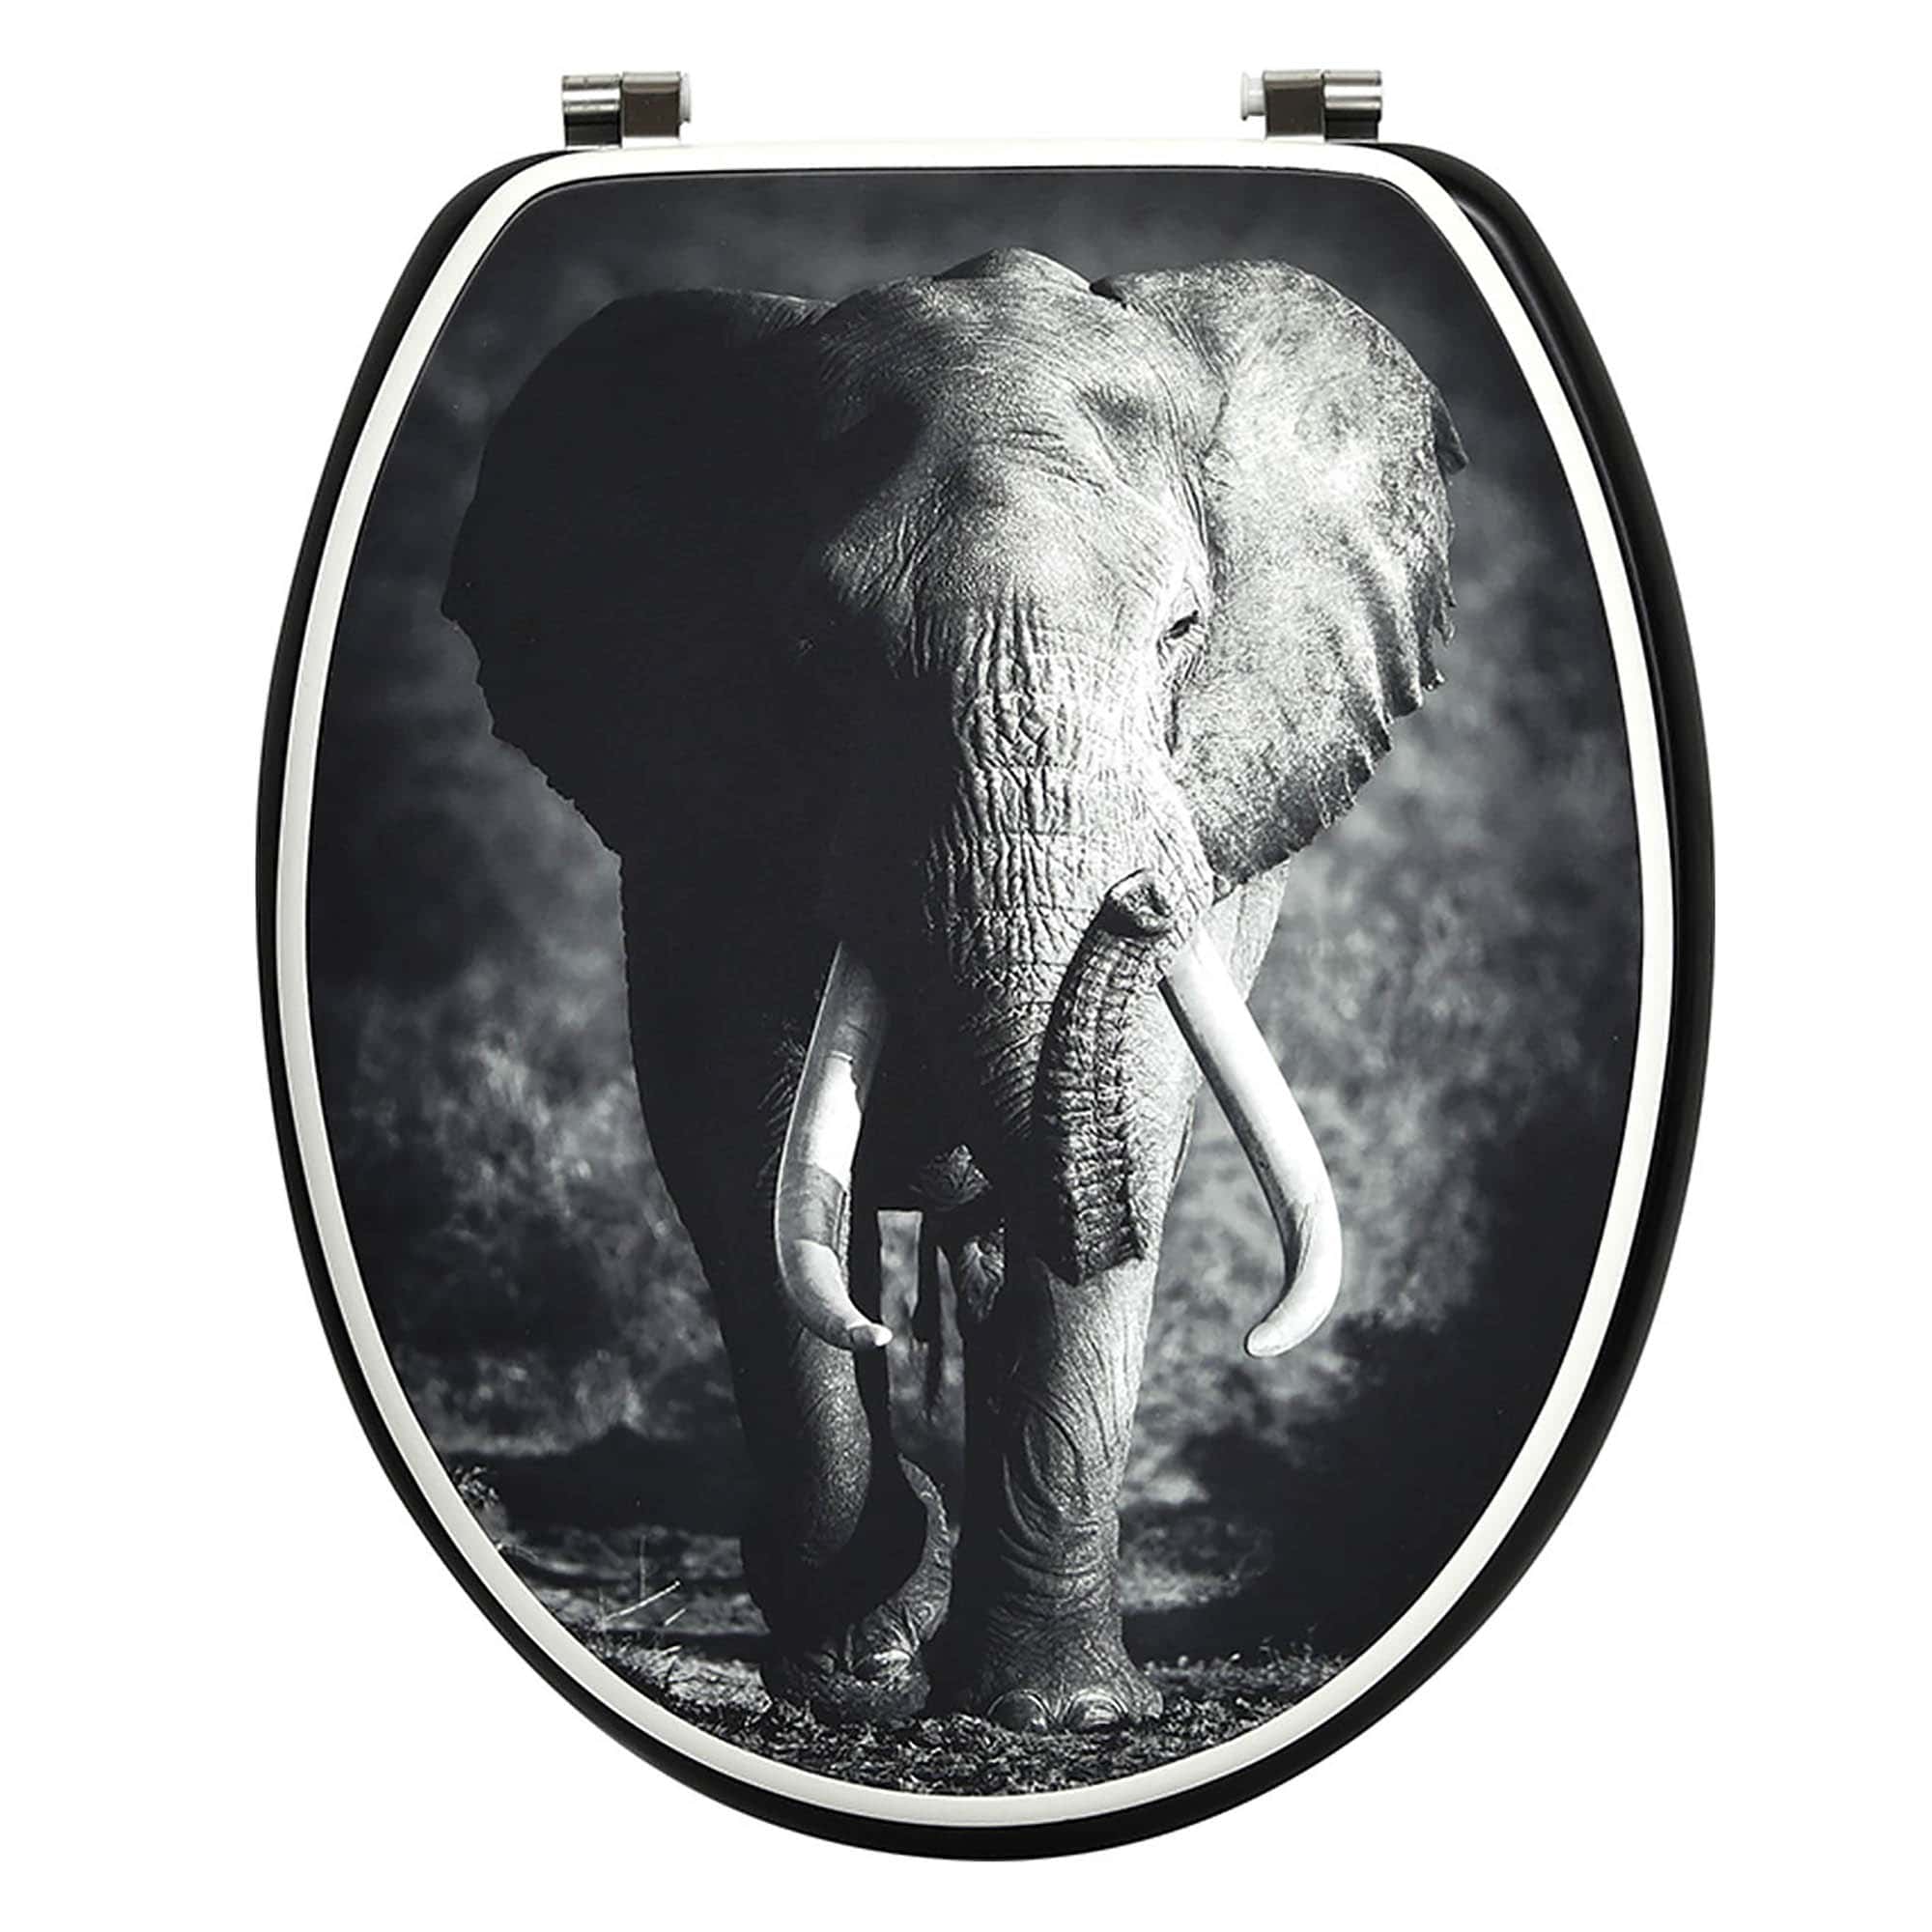 elongated toilet seat with elephant design